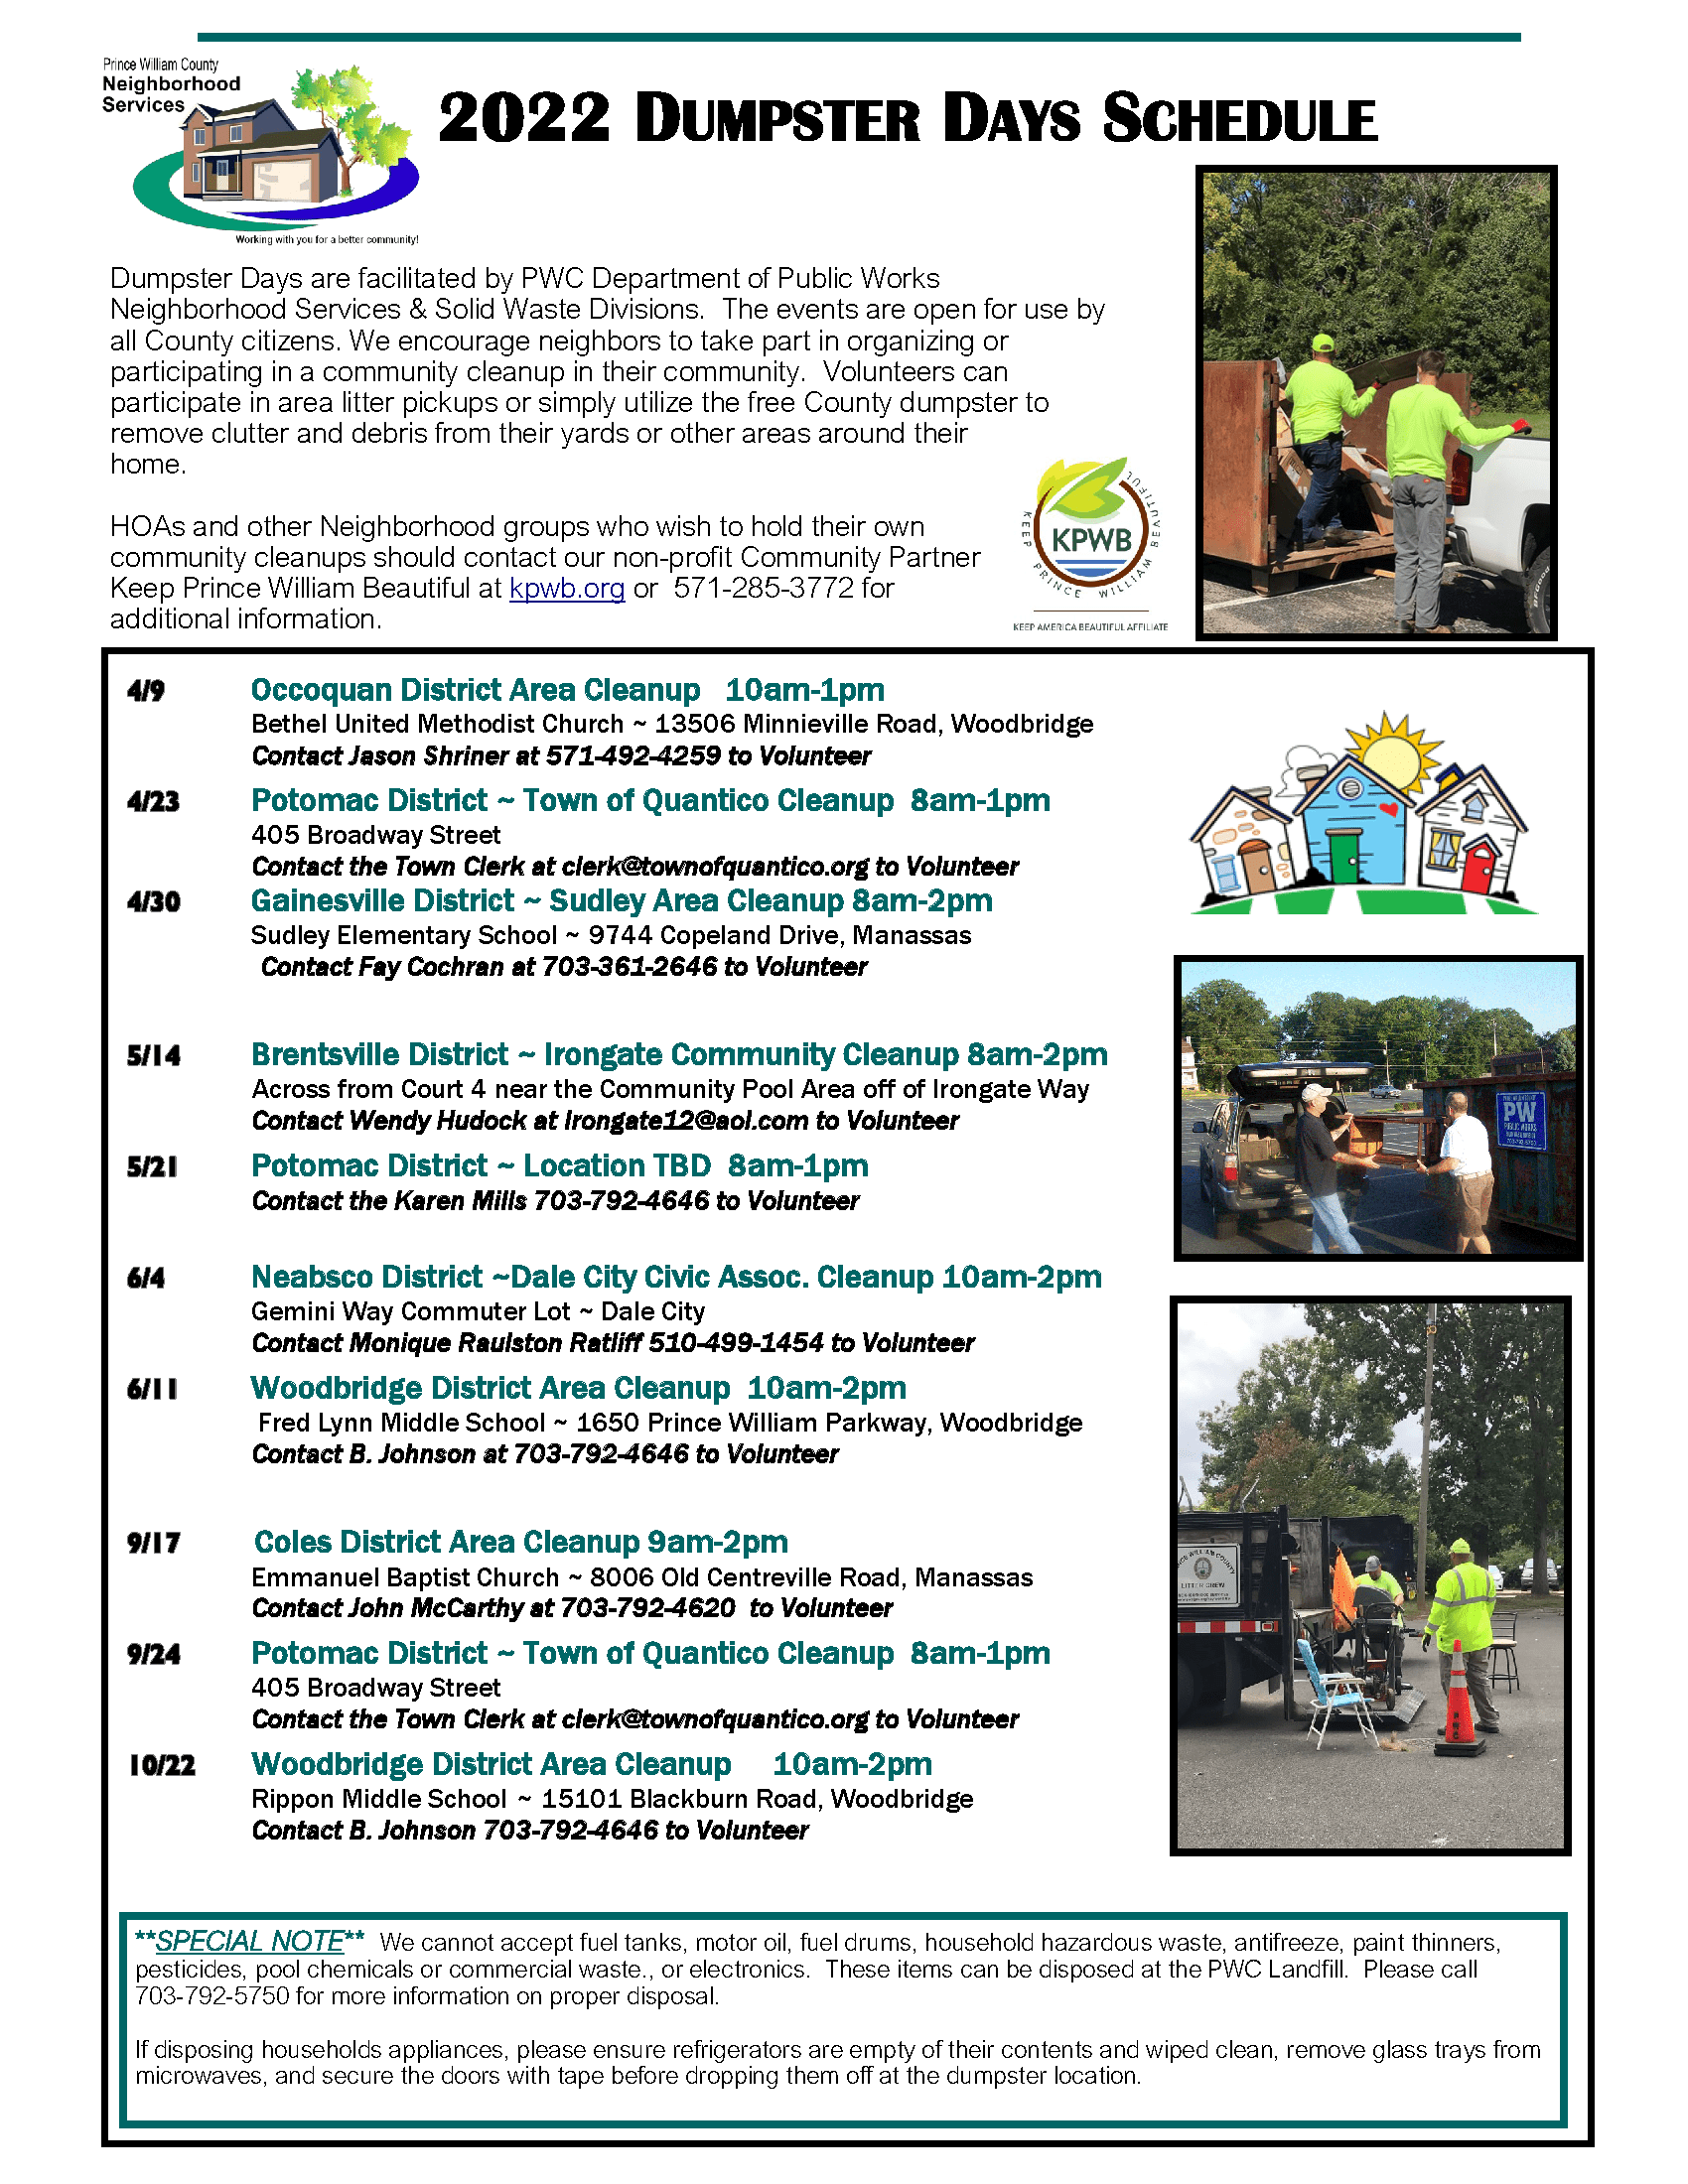 Dumpster Days Schedule 2022 FINAL 1 - 2022 DUMPSTER DAYS: Woodbridge District Area Cleanup